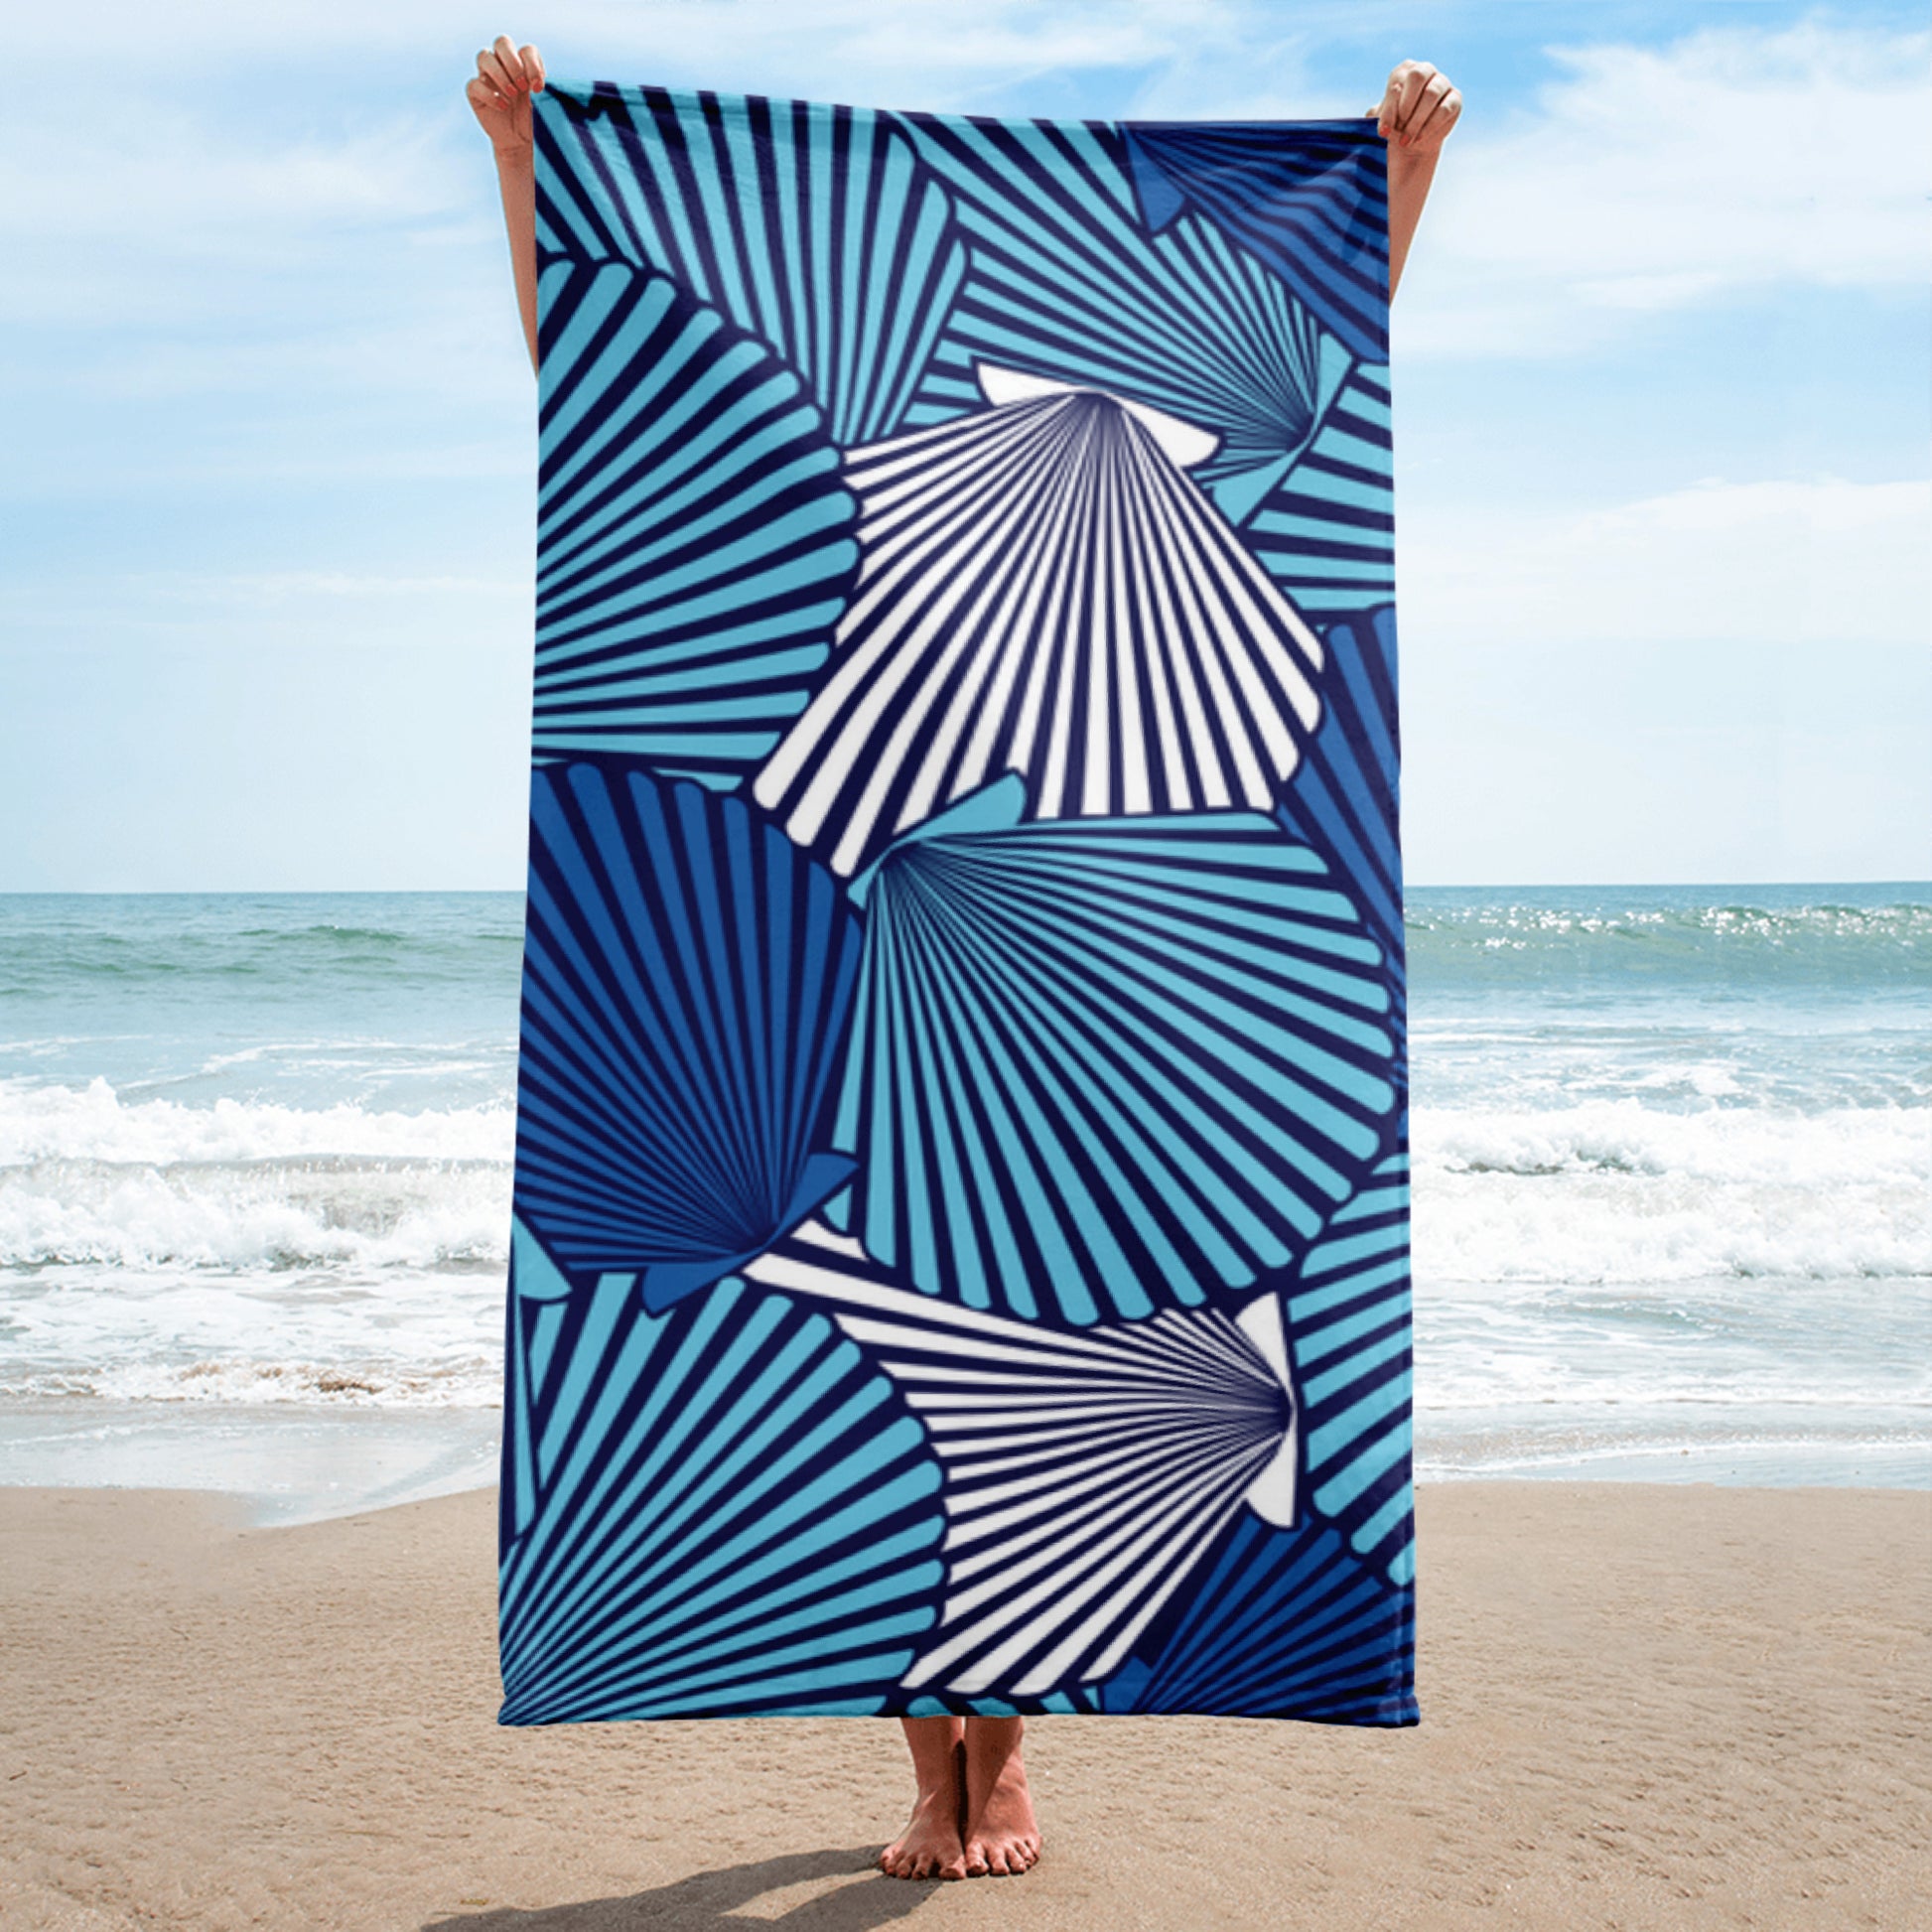 Geometric Seashell Towel - Essentric Swimwear